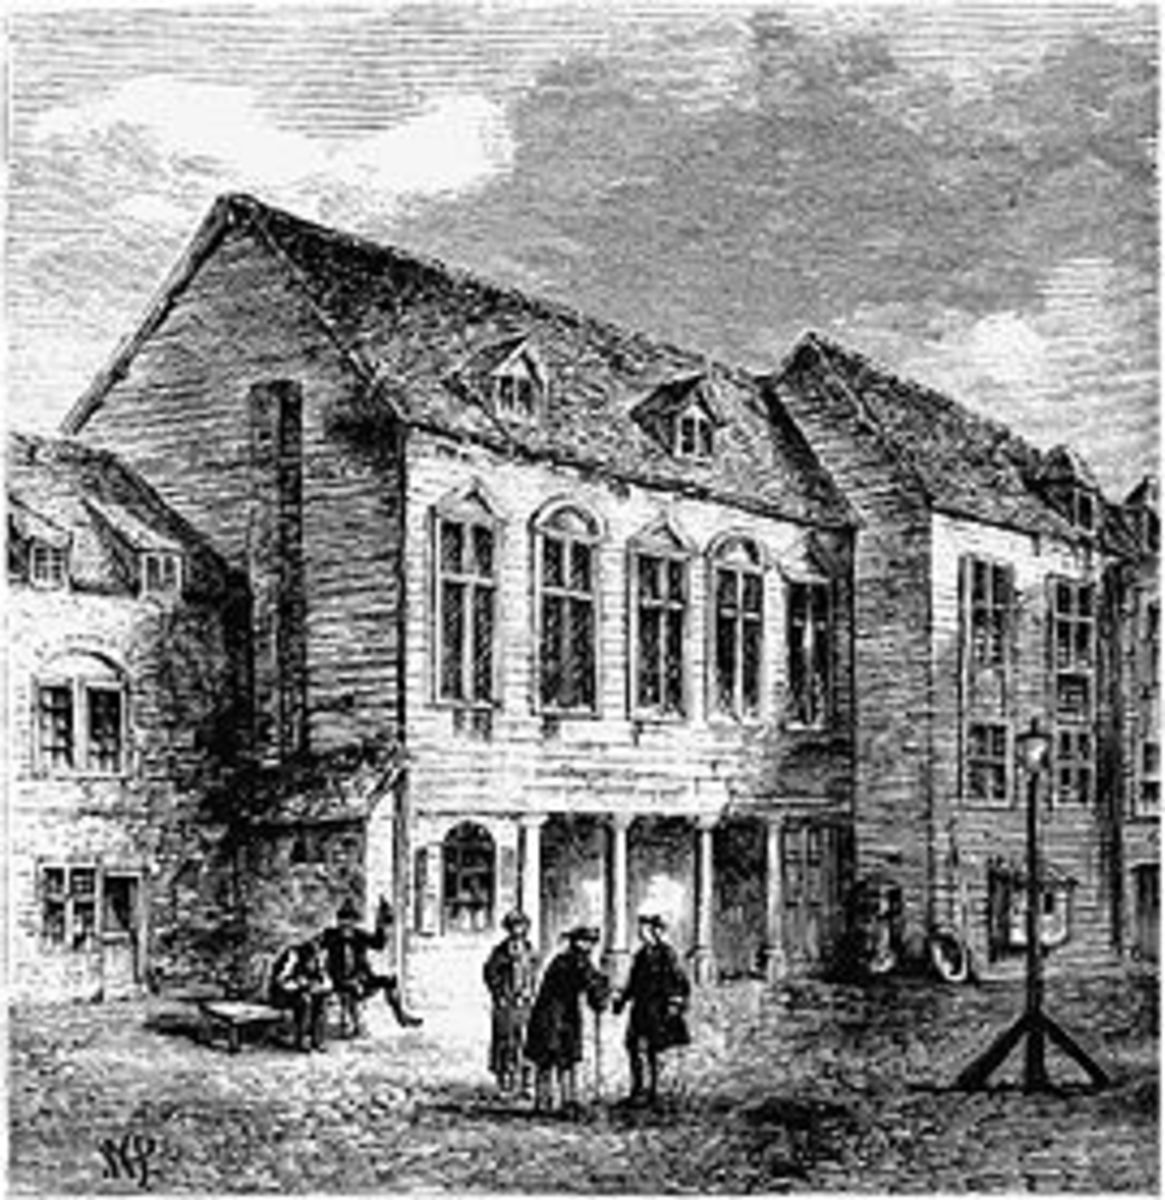 Marshalsea Prison - home to London's debtors in the 18th century.